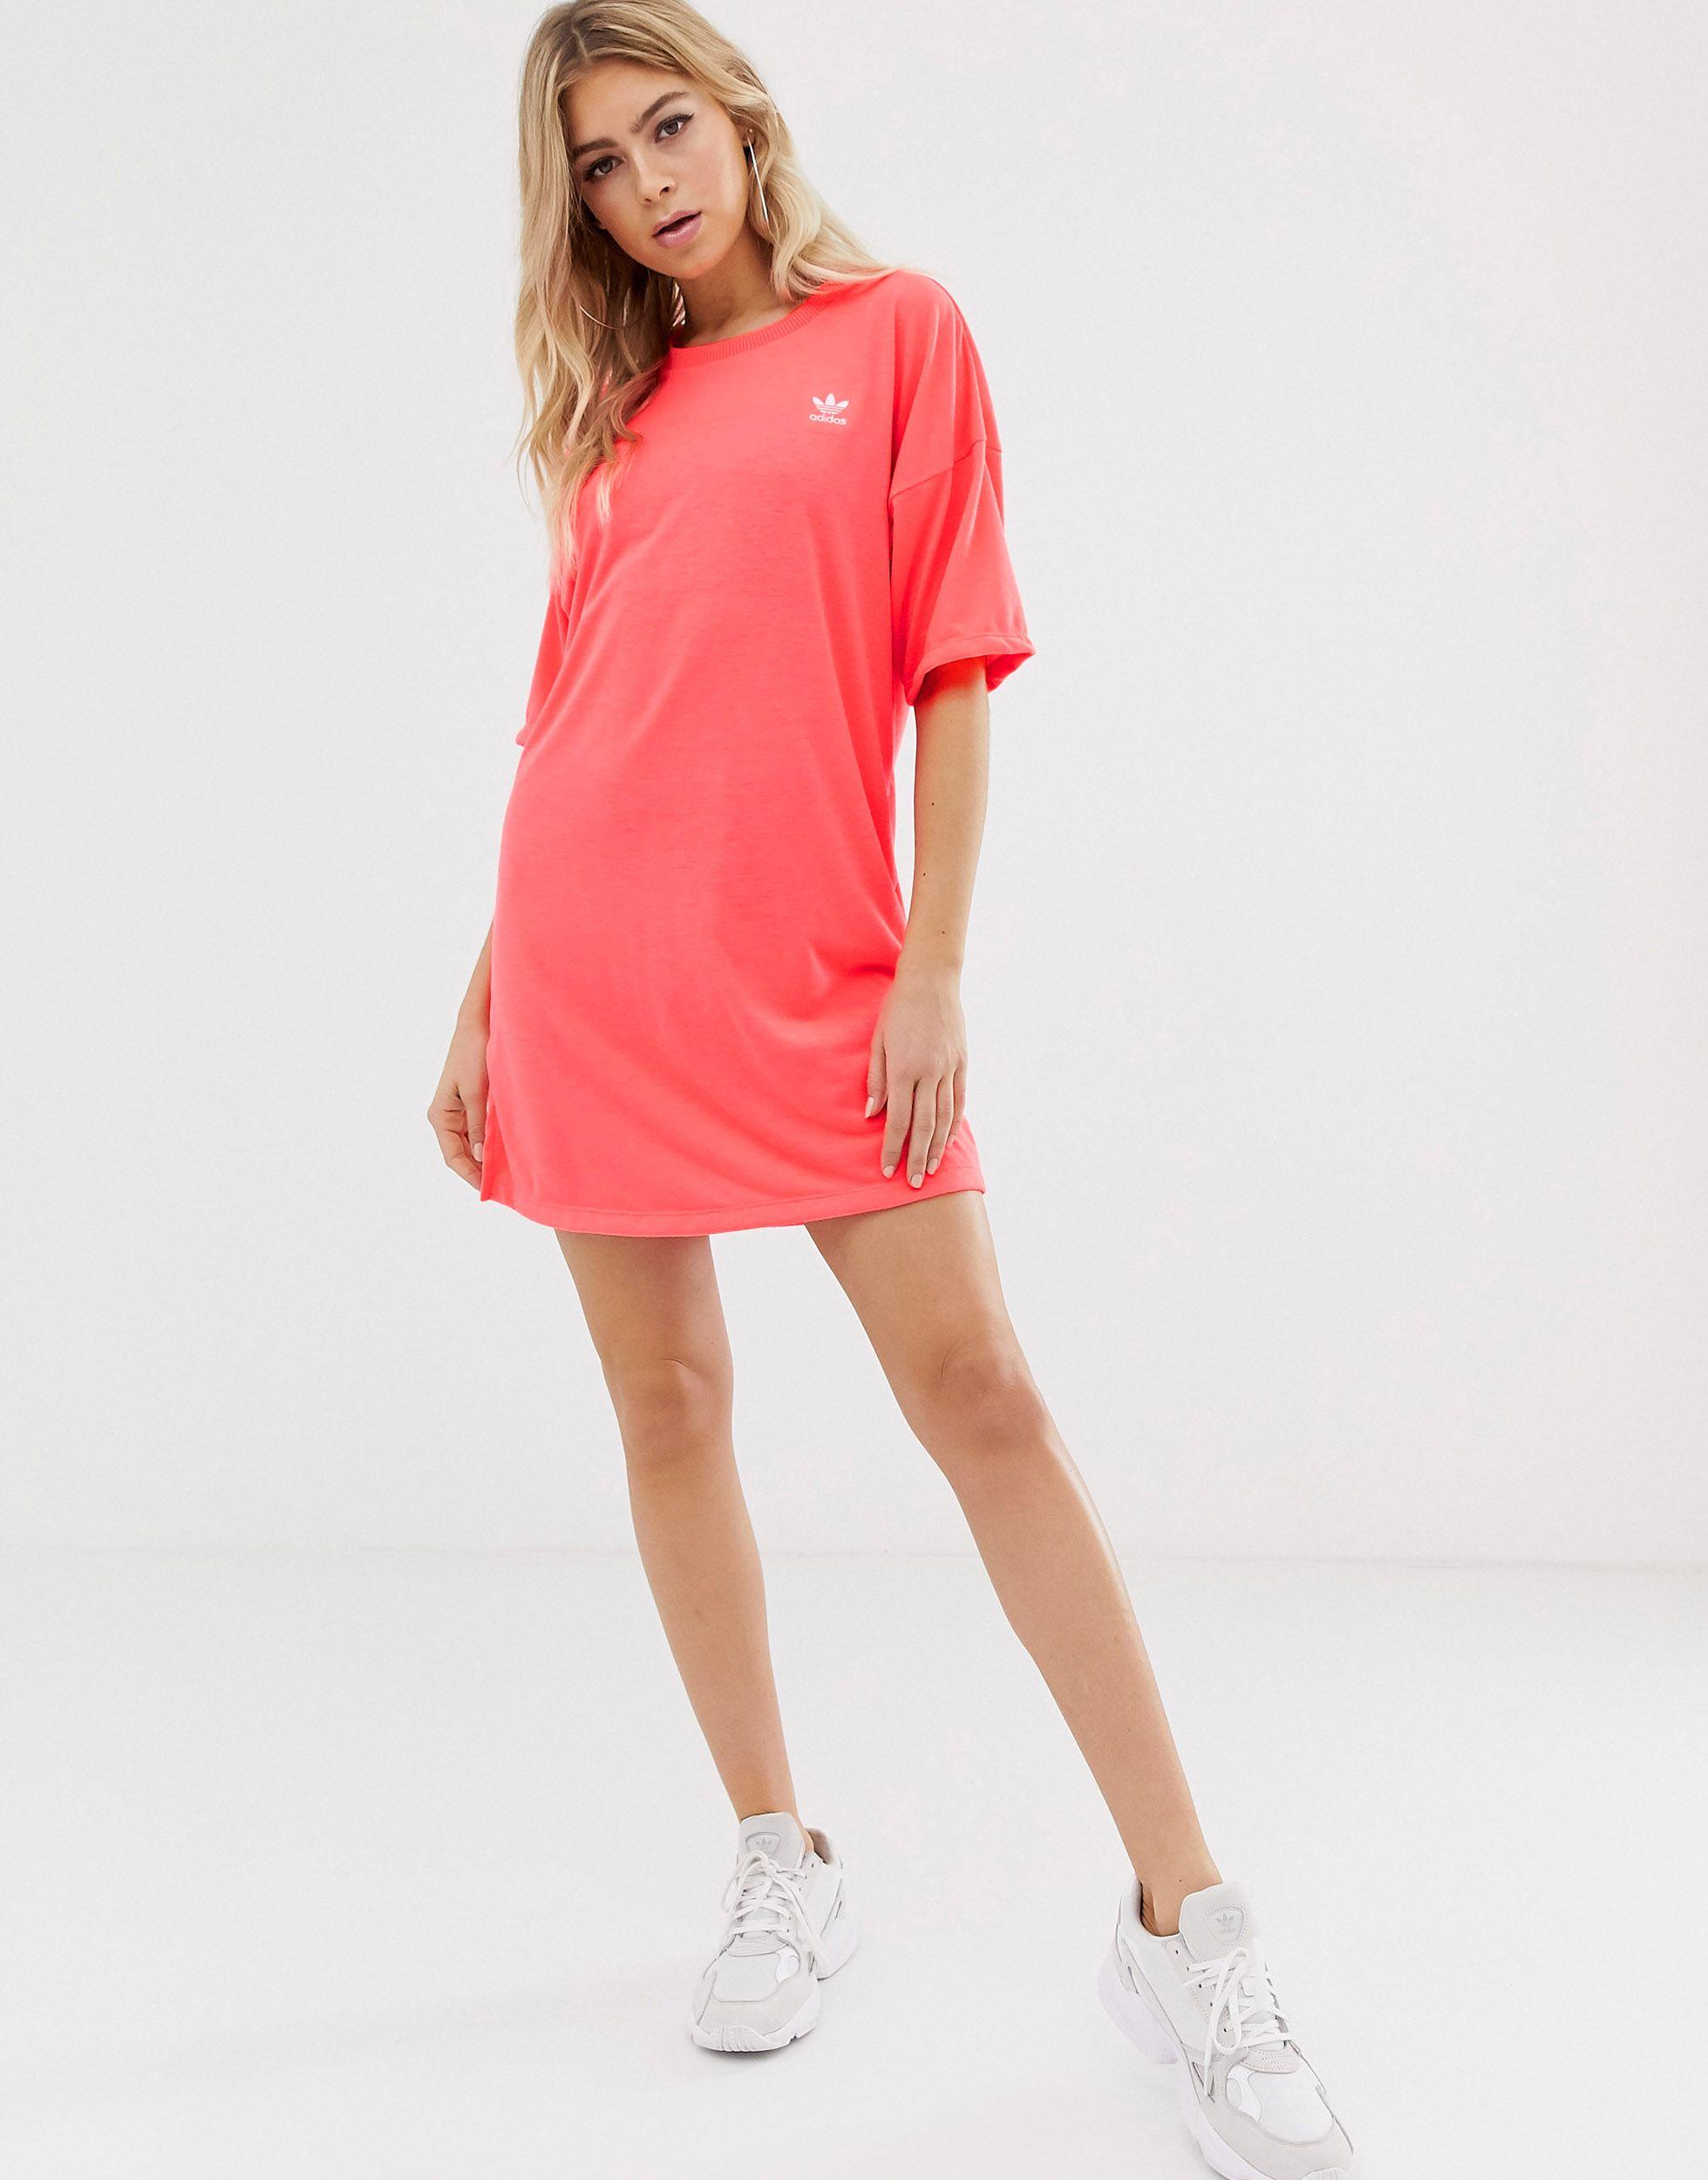 Adidas Pink T Shirt Dress on Sale, SAVE 36% - aveclumiere.com